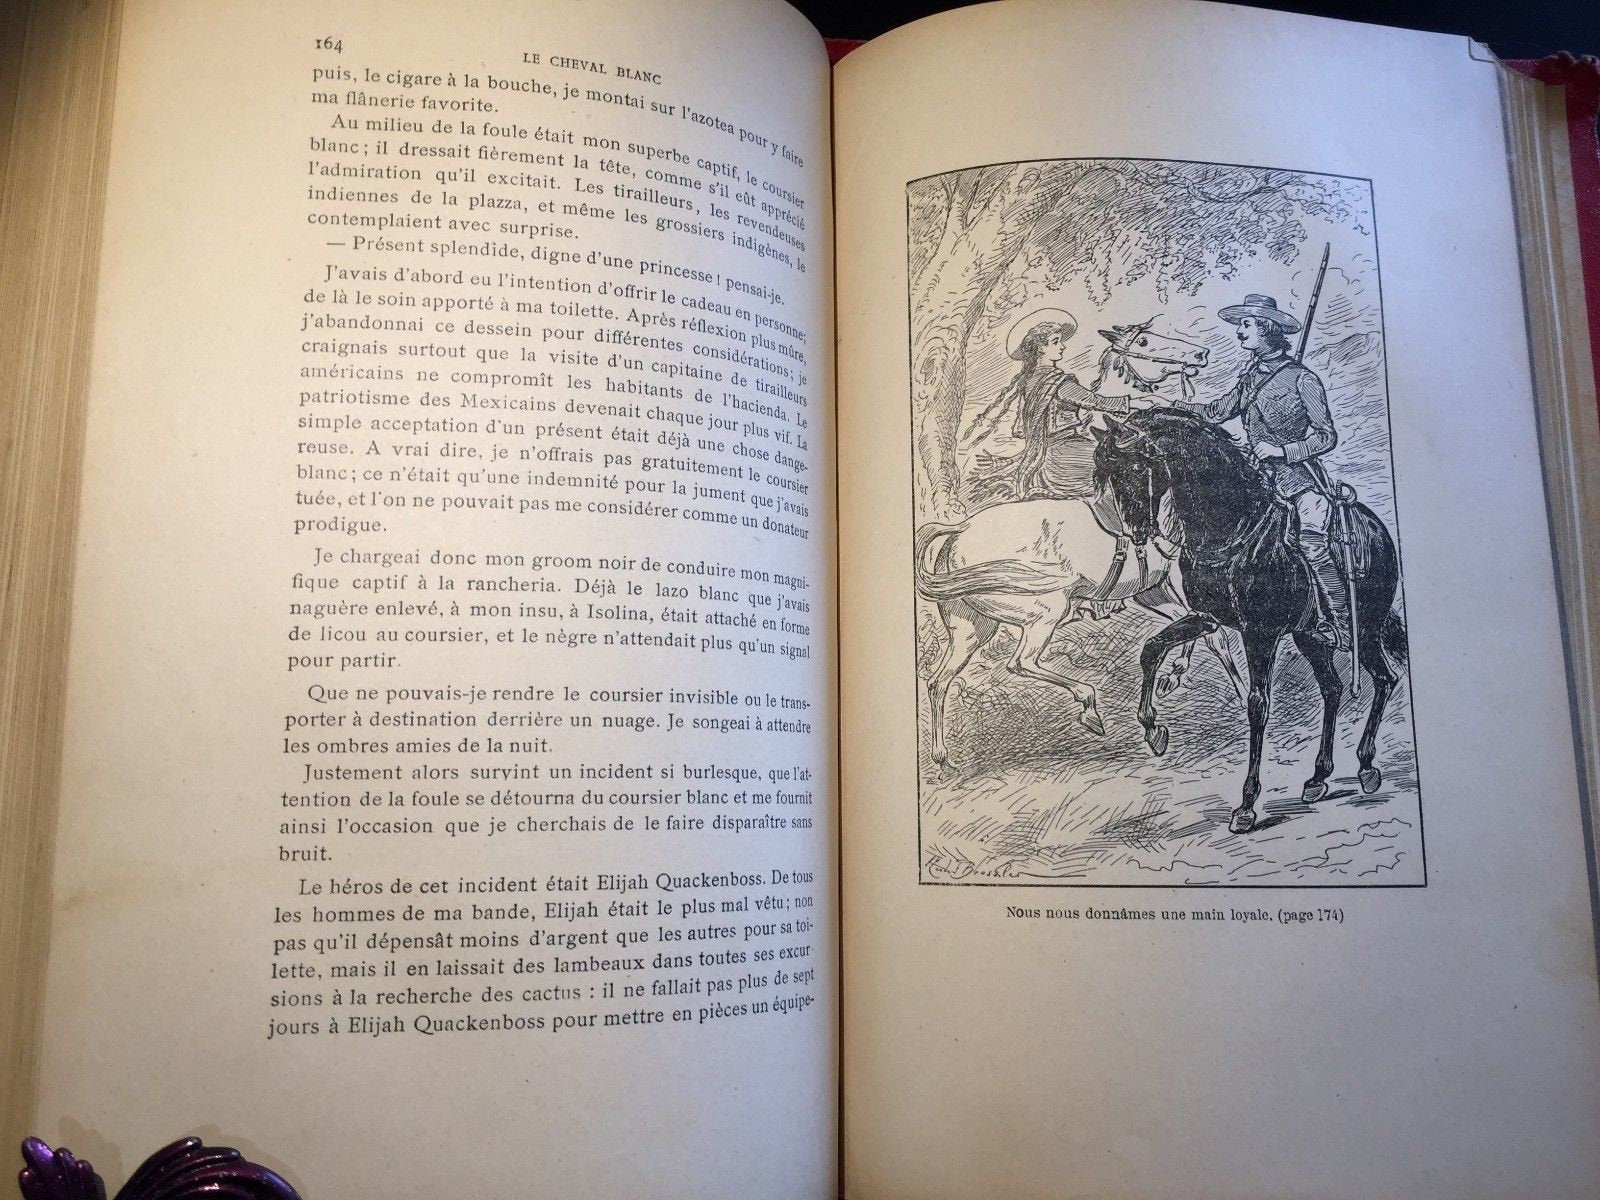 Le Cheval Blanc Par Le Capitaine Mayne-Reid, French, Illustrated, Rare, c1907